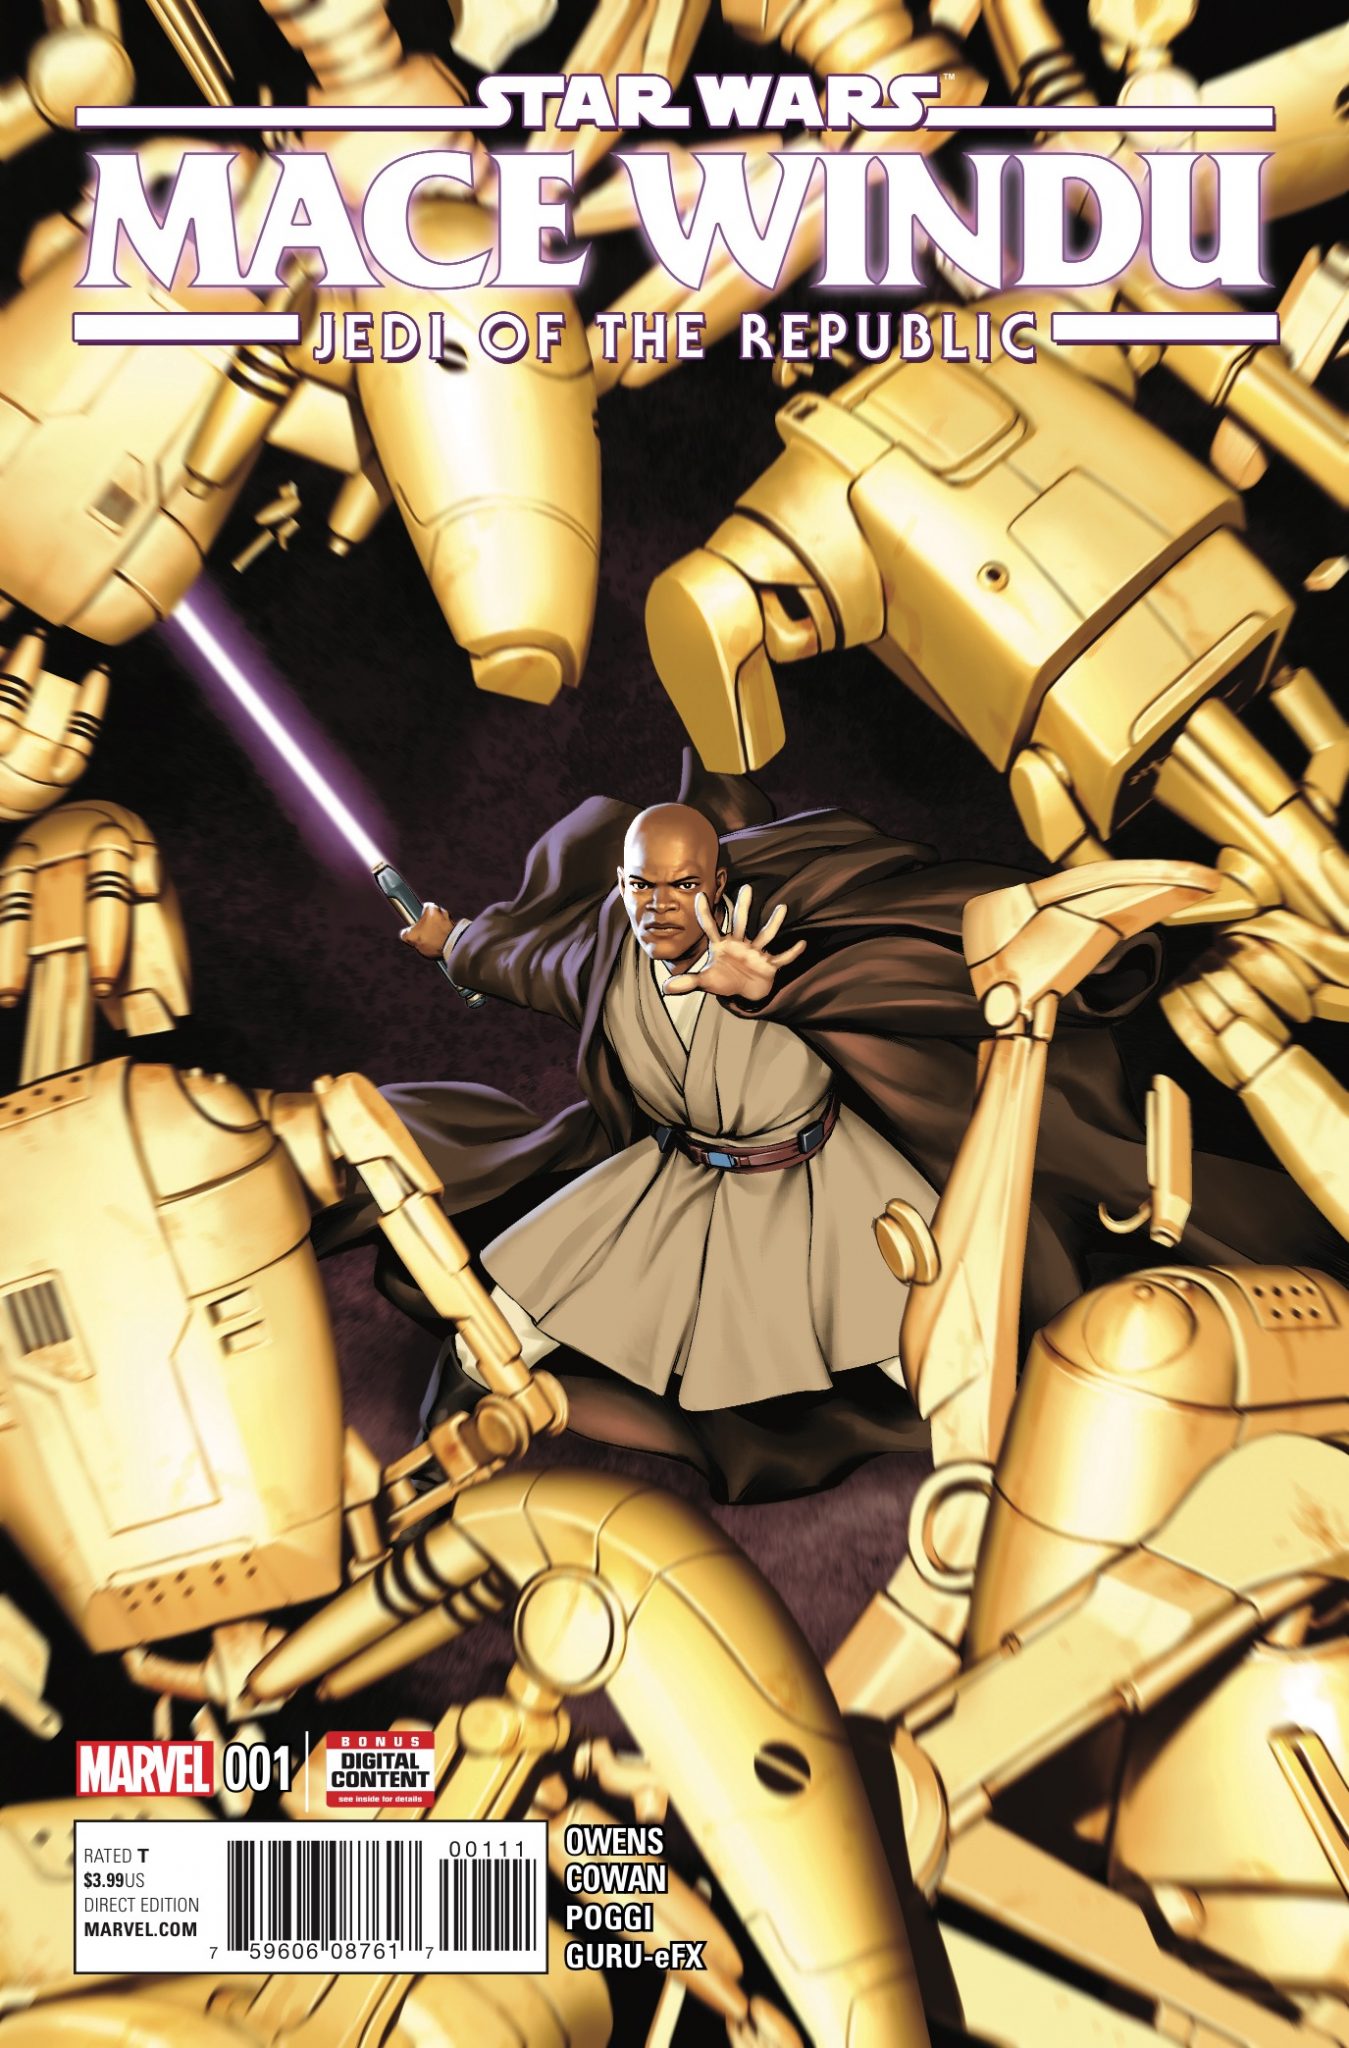 Marvel Preview: Star Wars: Jedi of the Republic - Mace Windu #1